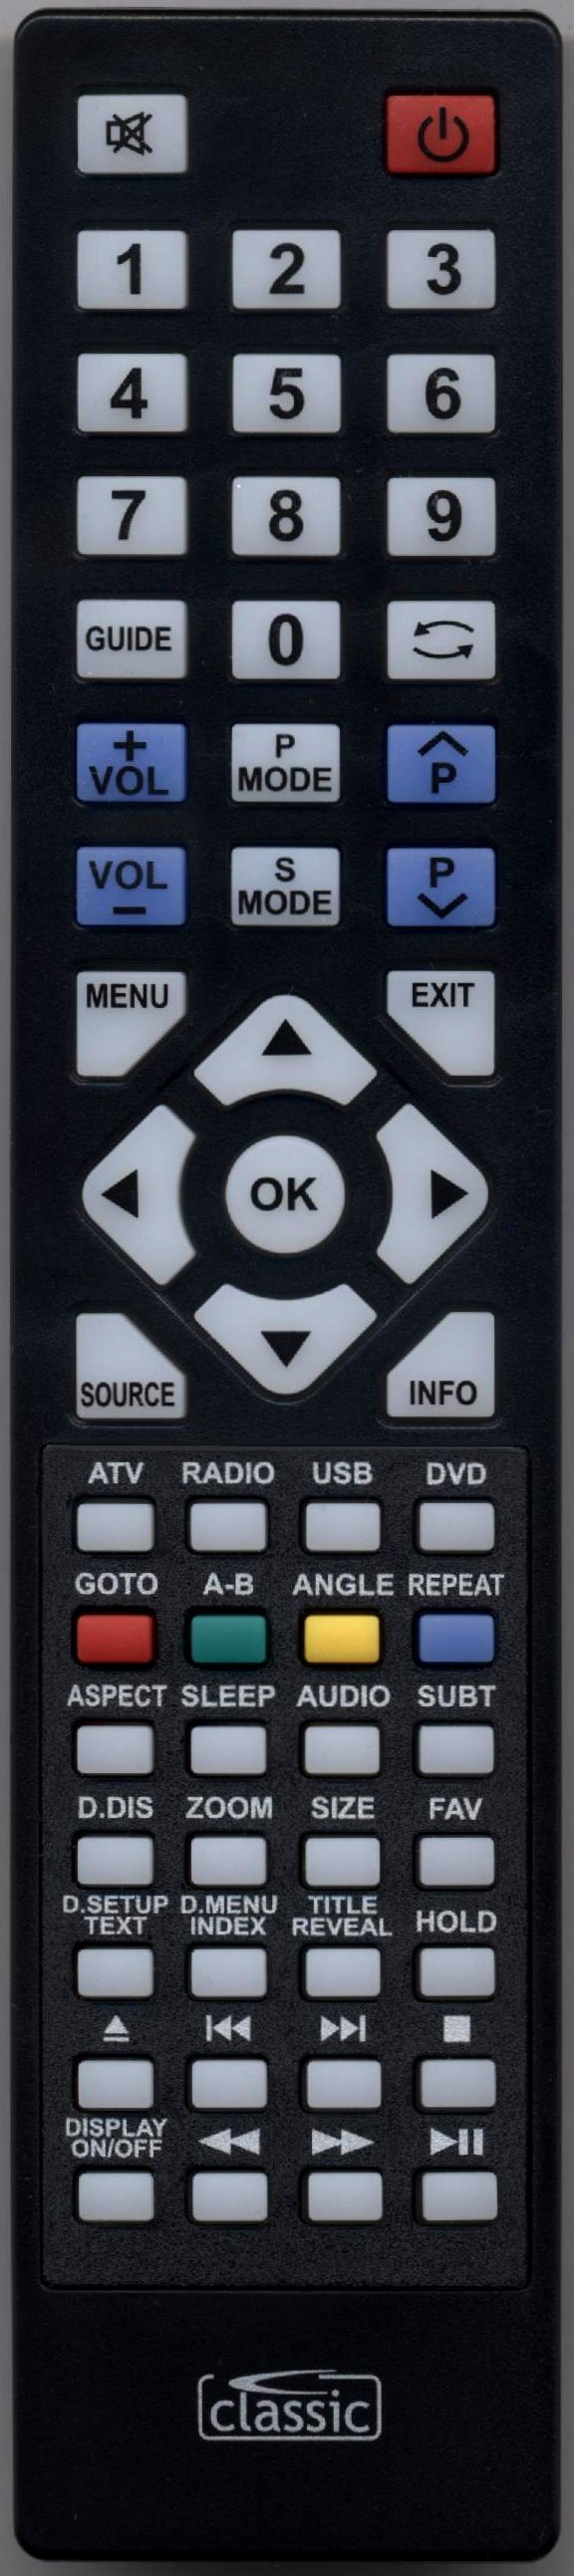 UMC X185/38B-GB-TC-UK Remote Control